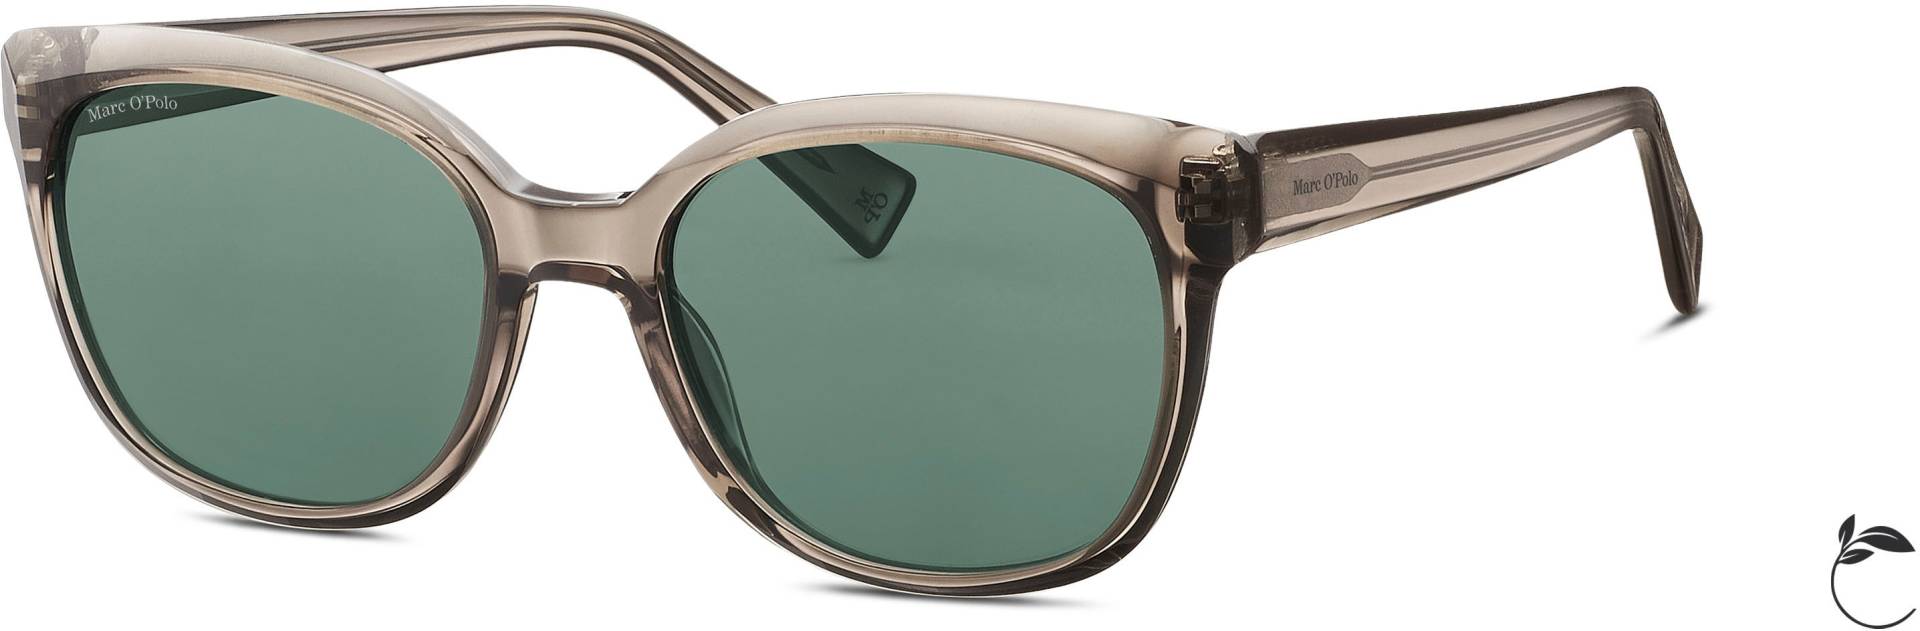 Marc O'Polo Sonnenbrille »Modell 506196«, Karree-Form von Marc O'Polo